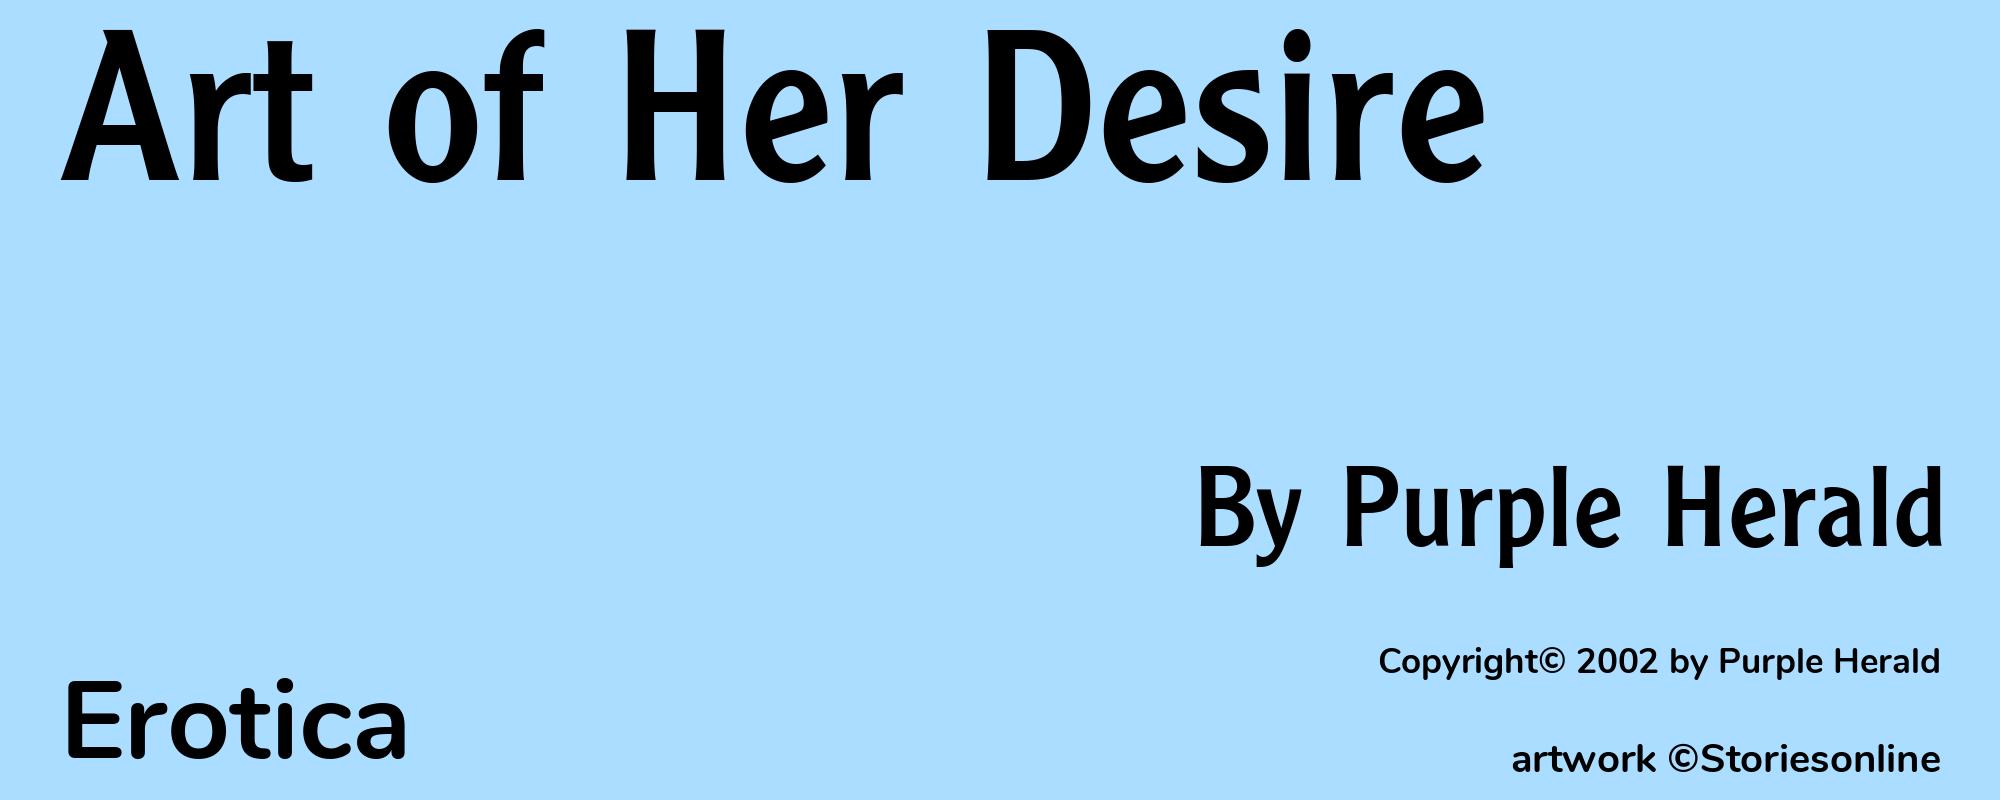 Art of Her Desire - Cover